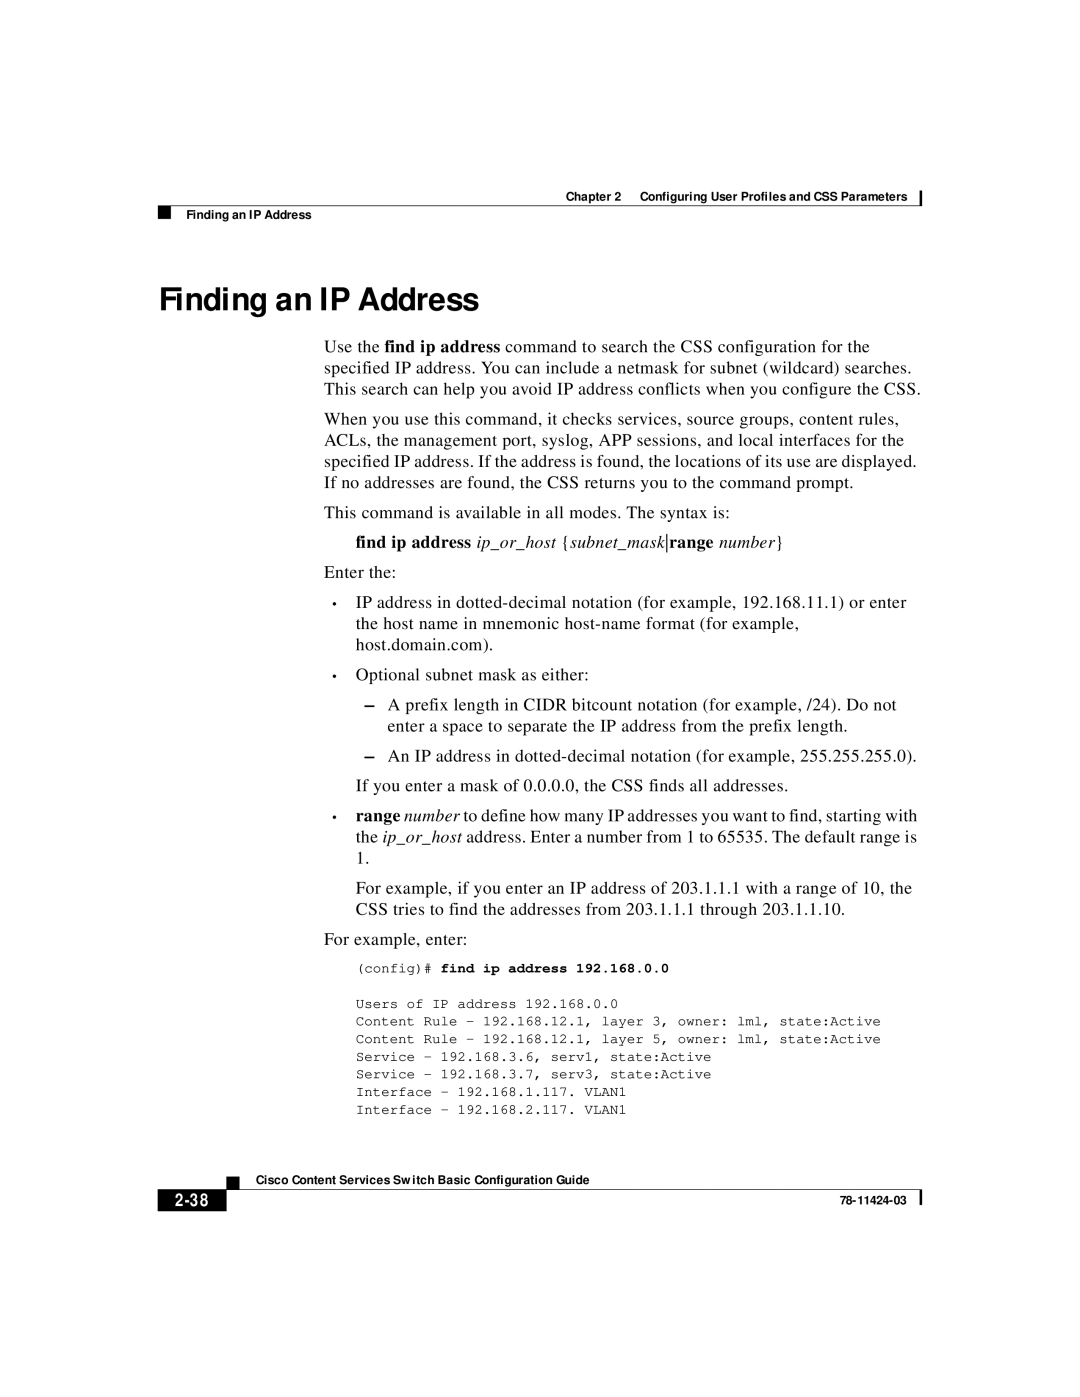 Cisco Systems 78-11424-03 manual Finding an IP Address, find ip address iporhost subnetmaskrange number, 2-38 